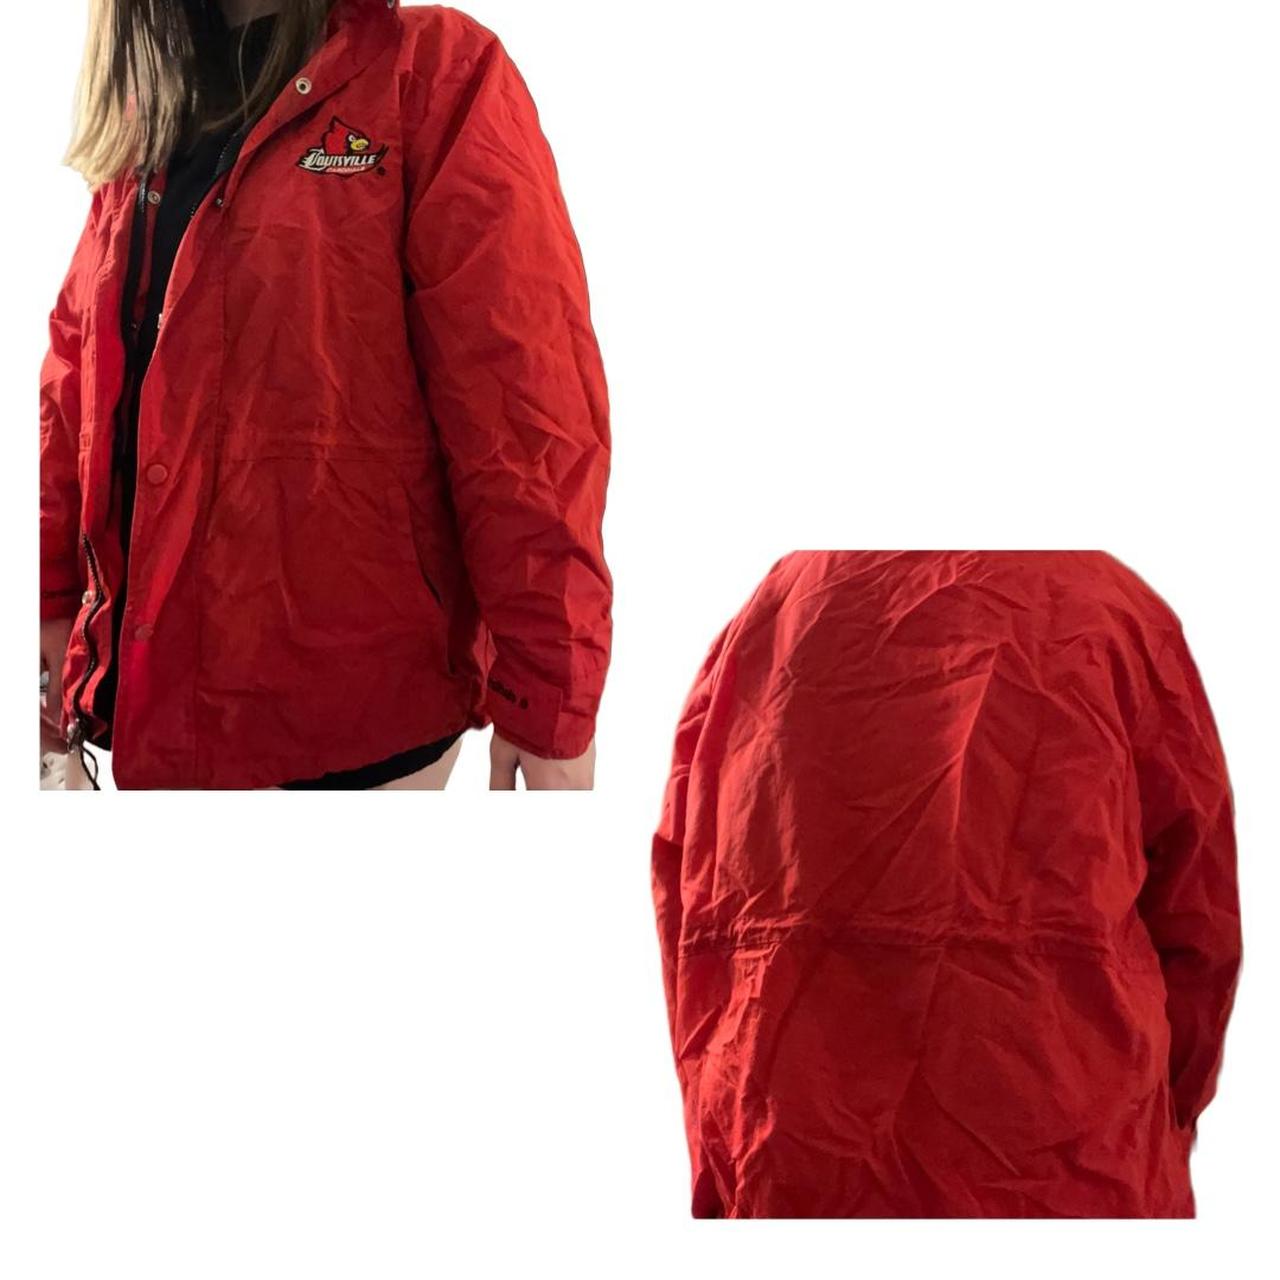 louisville cardinals vintage jacket